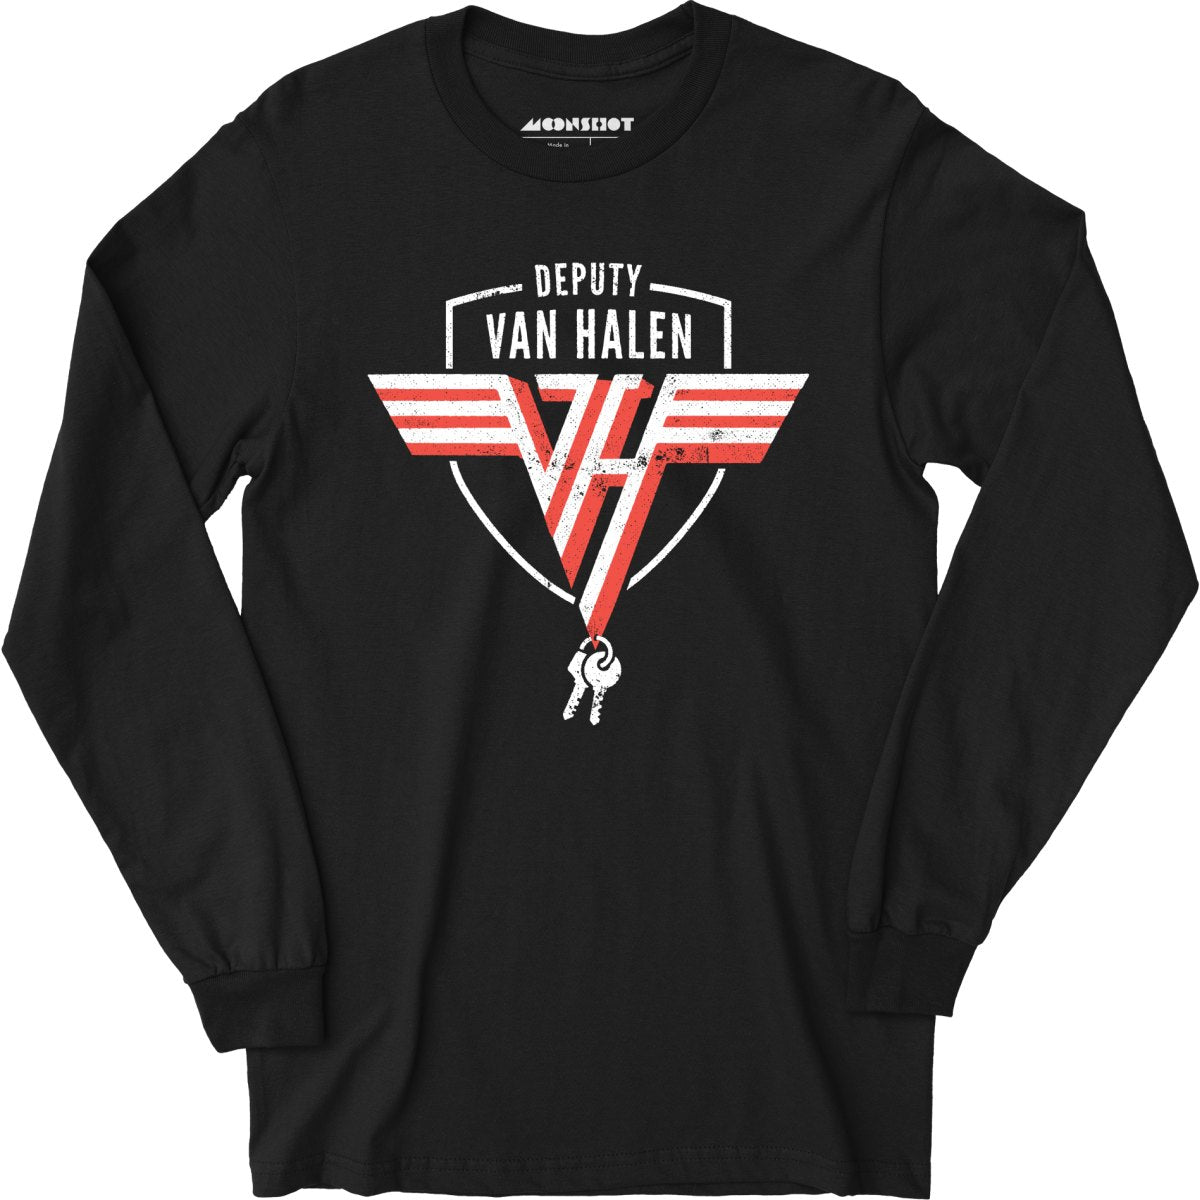 Deputy Van Halen - Long Sleeve T-Shirt